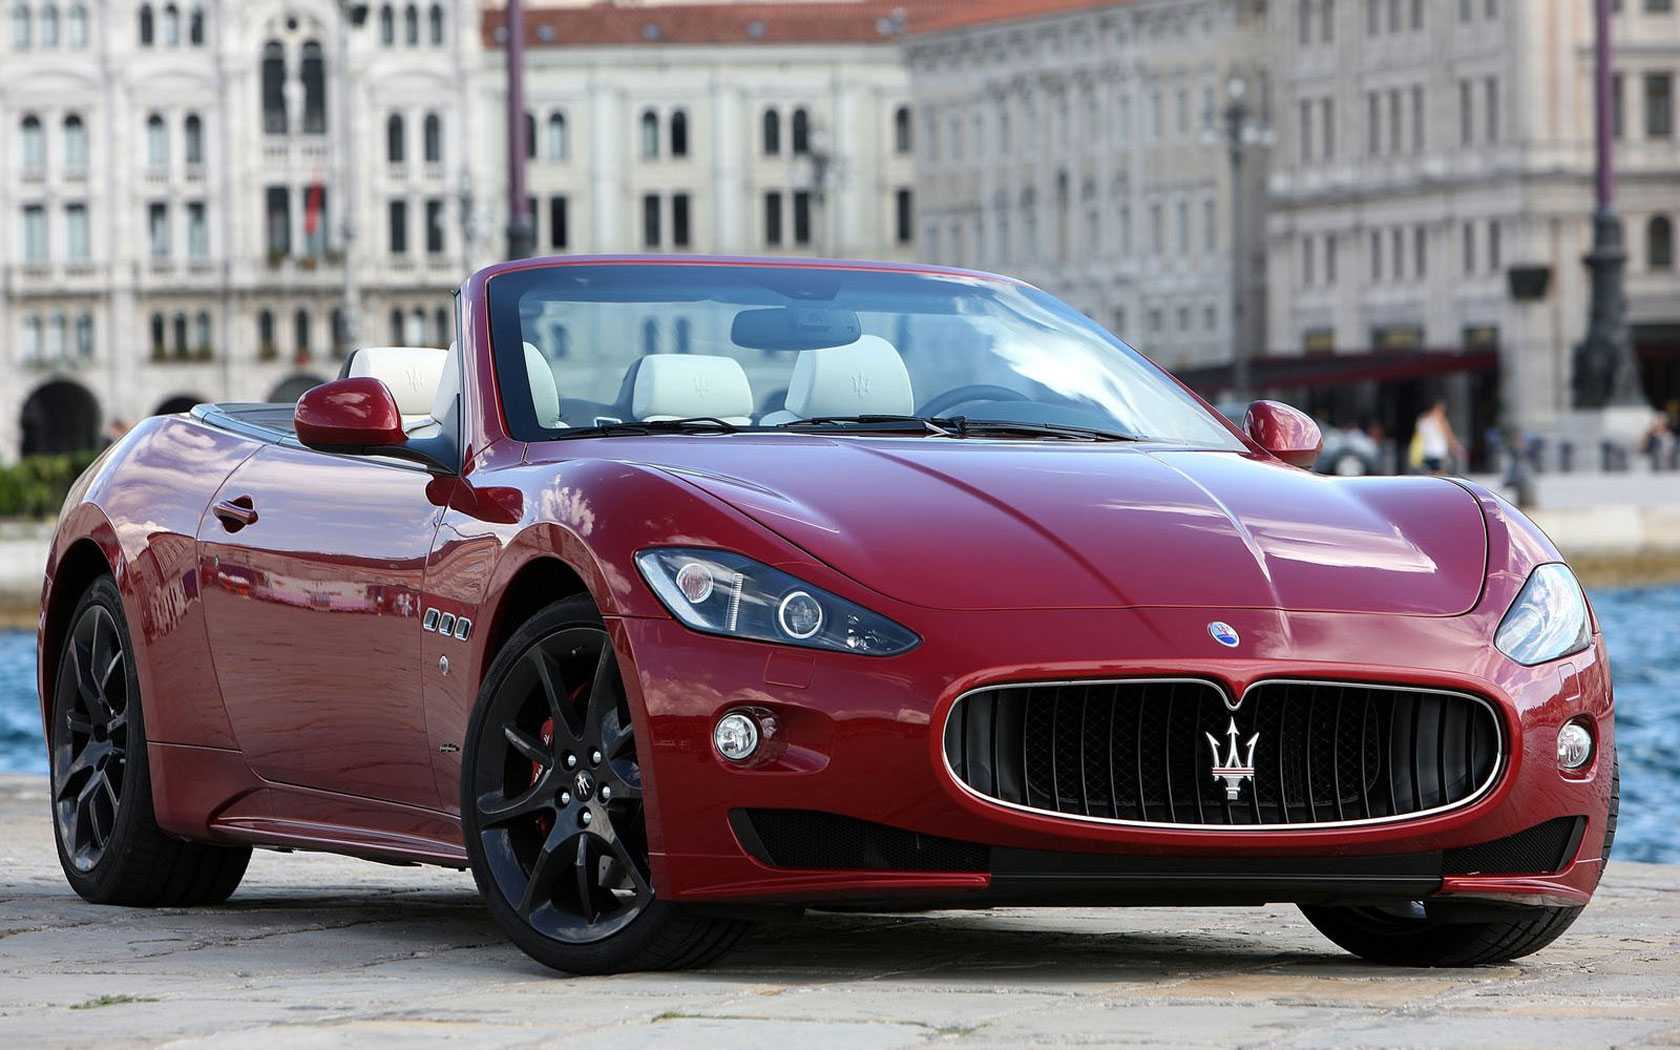 Buying a Maserati car in Israel